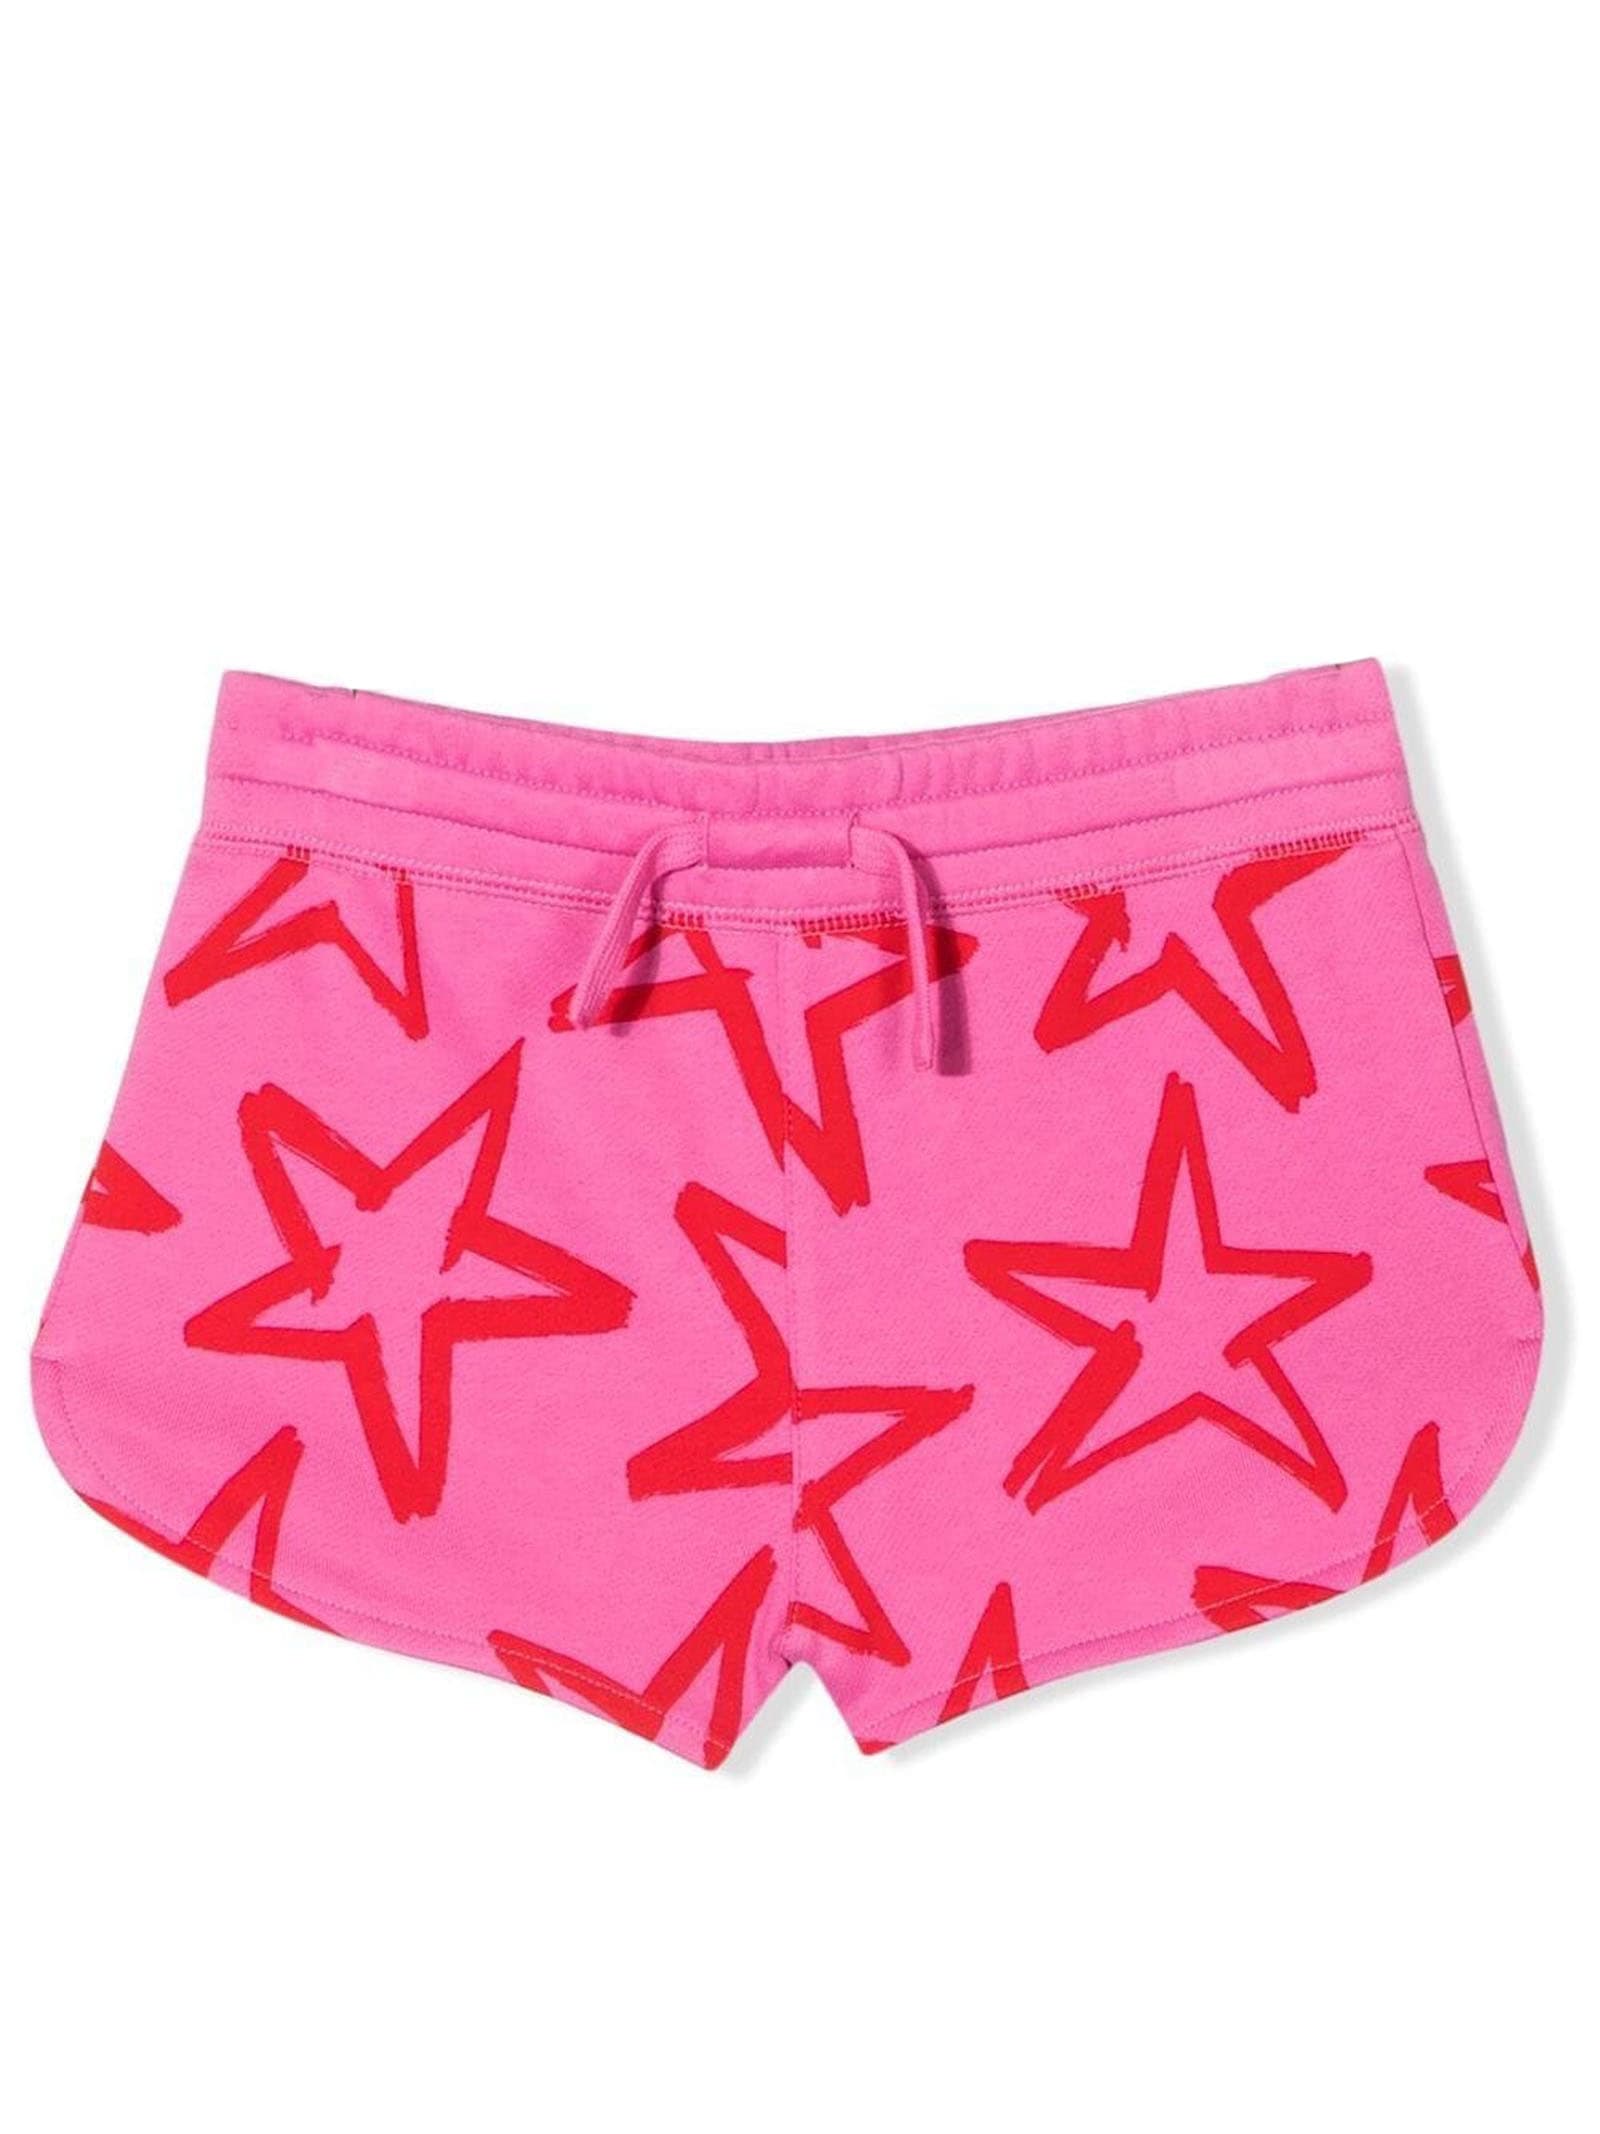 Stella McCartney Kids Pink Cotton Shorts